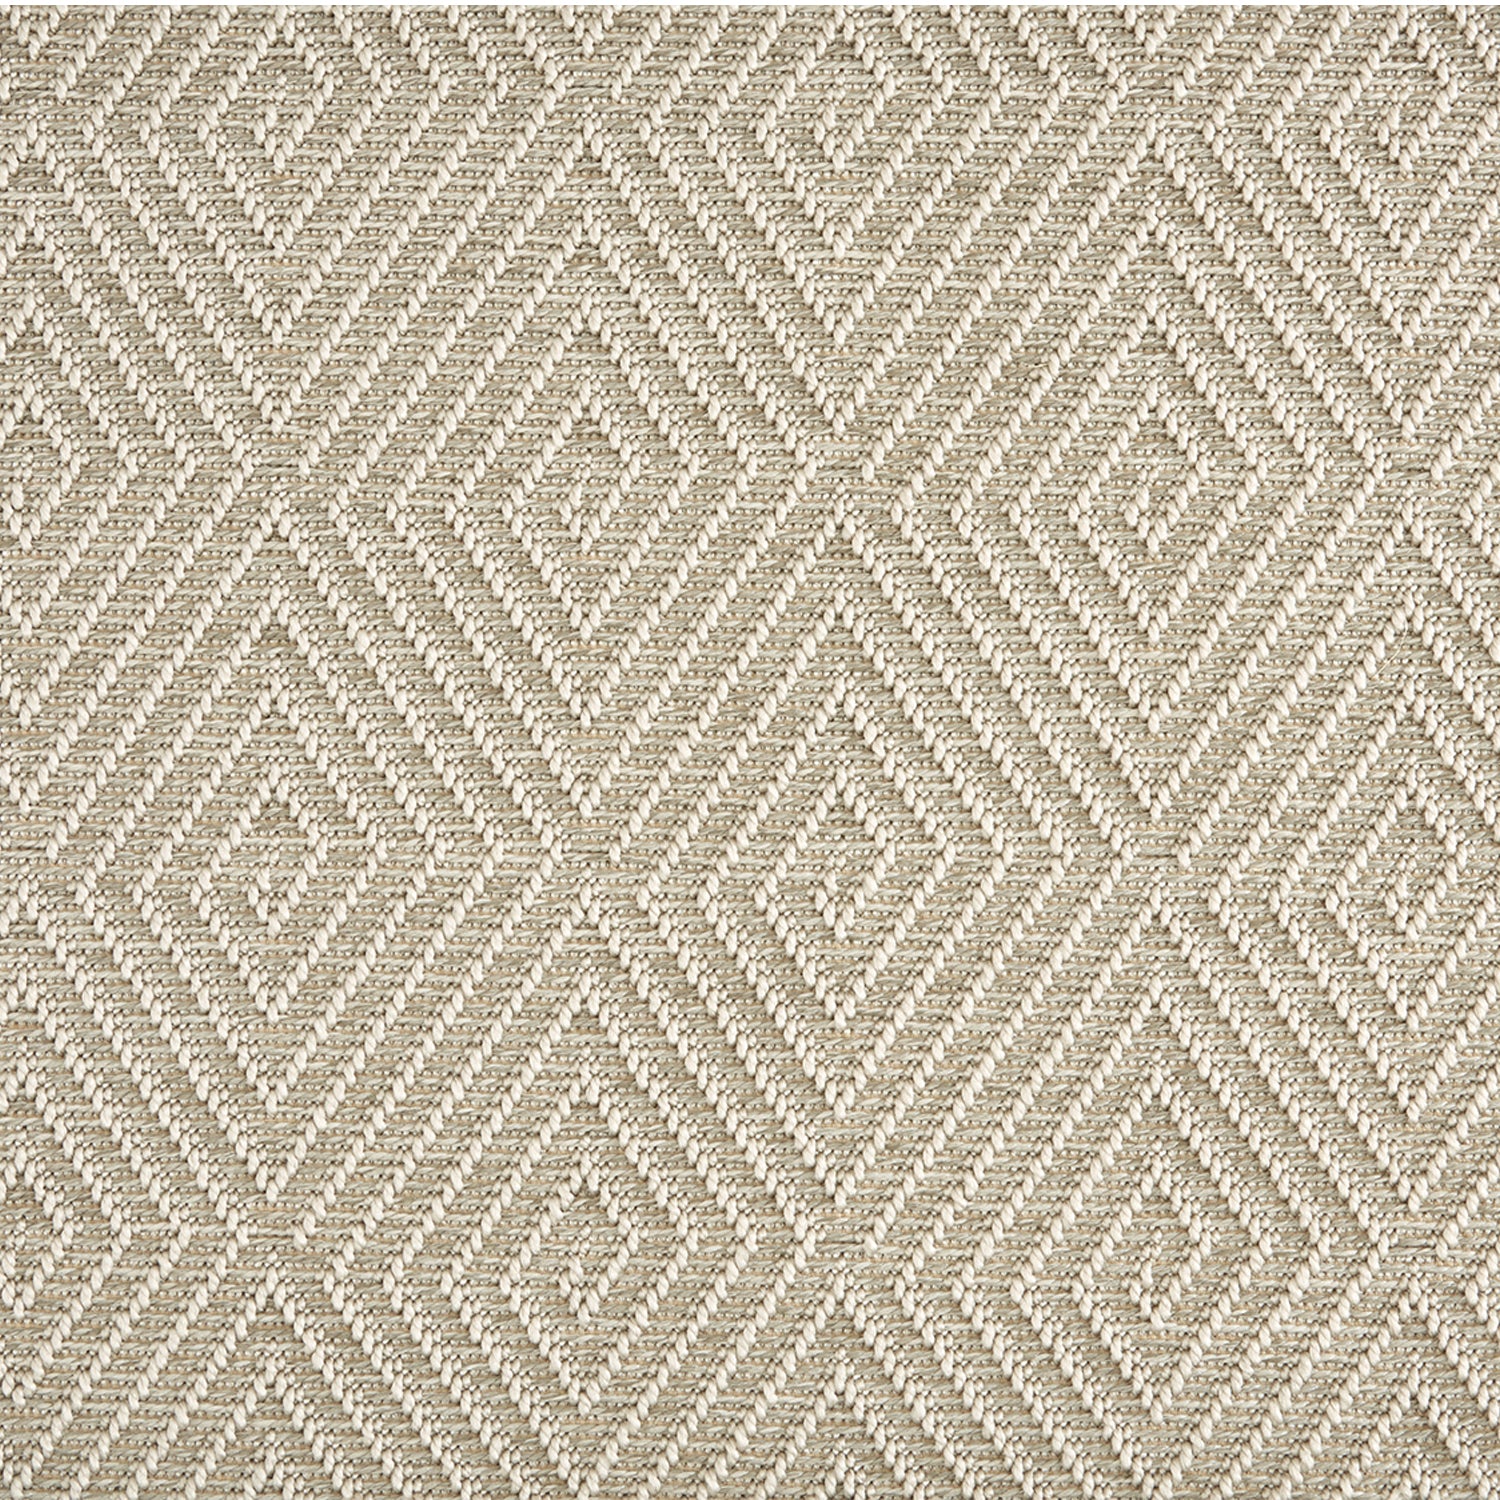 Outdoor broadloom carpet swatch in a dense repeating diamond pattern in cream on a greige field.